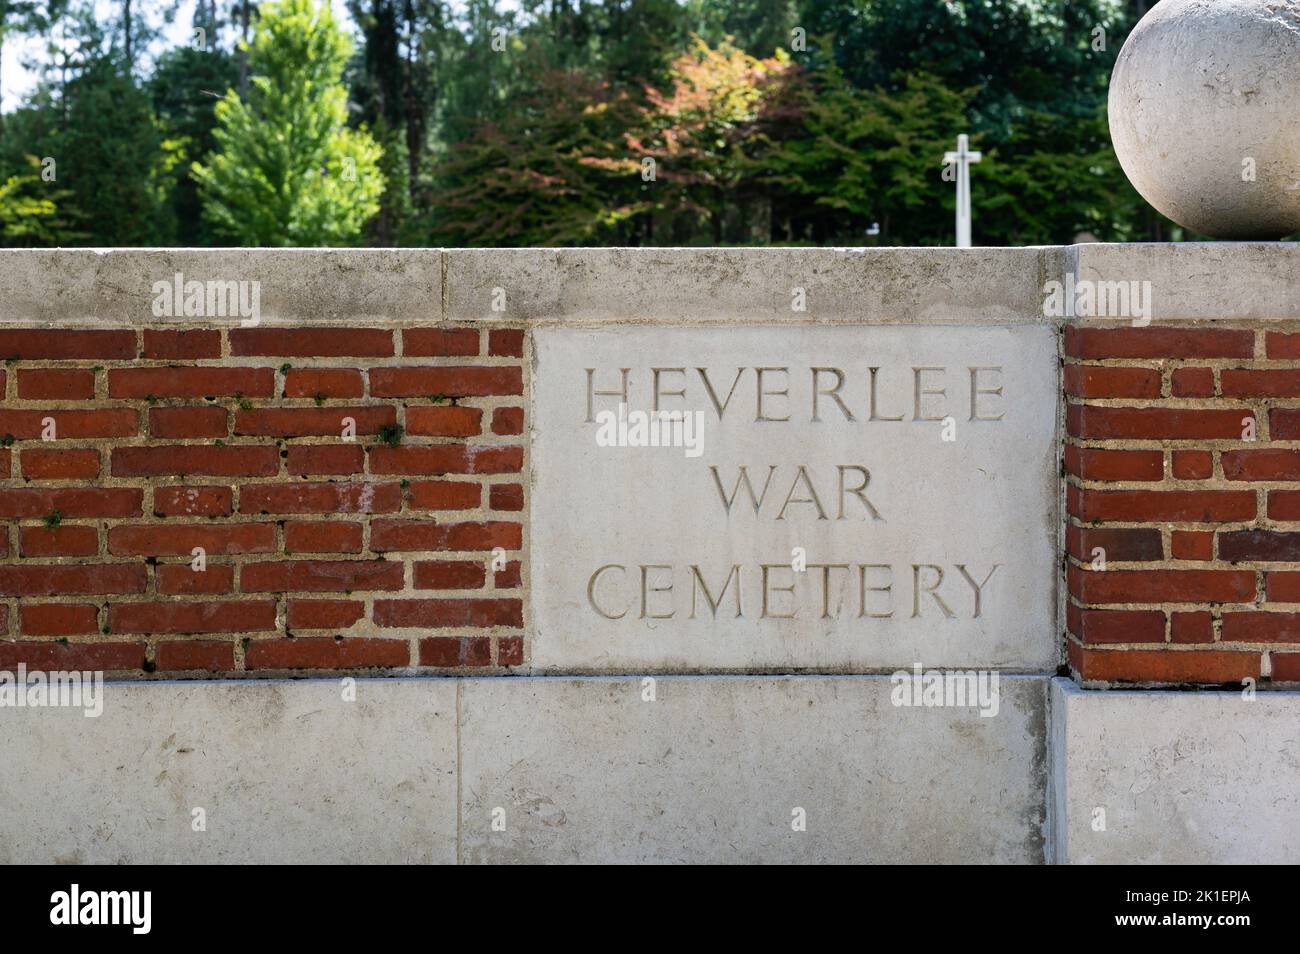 Heverlee, Flemish Brabant, Belgium - 08 21 2022 - Sign of the Heverlee War Cemetery against a brick stone wall Stock Photo